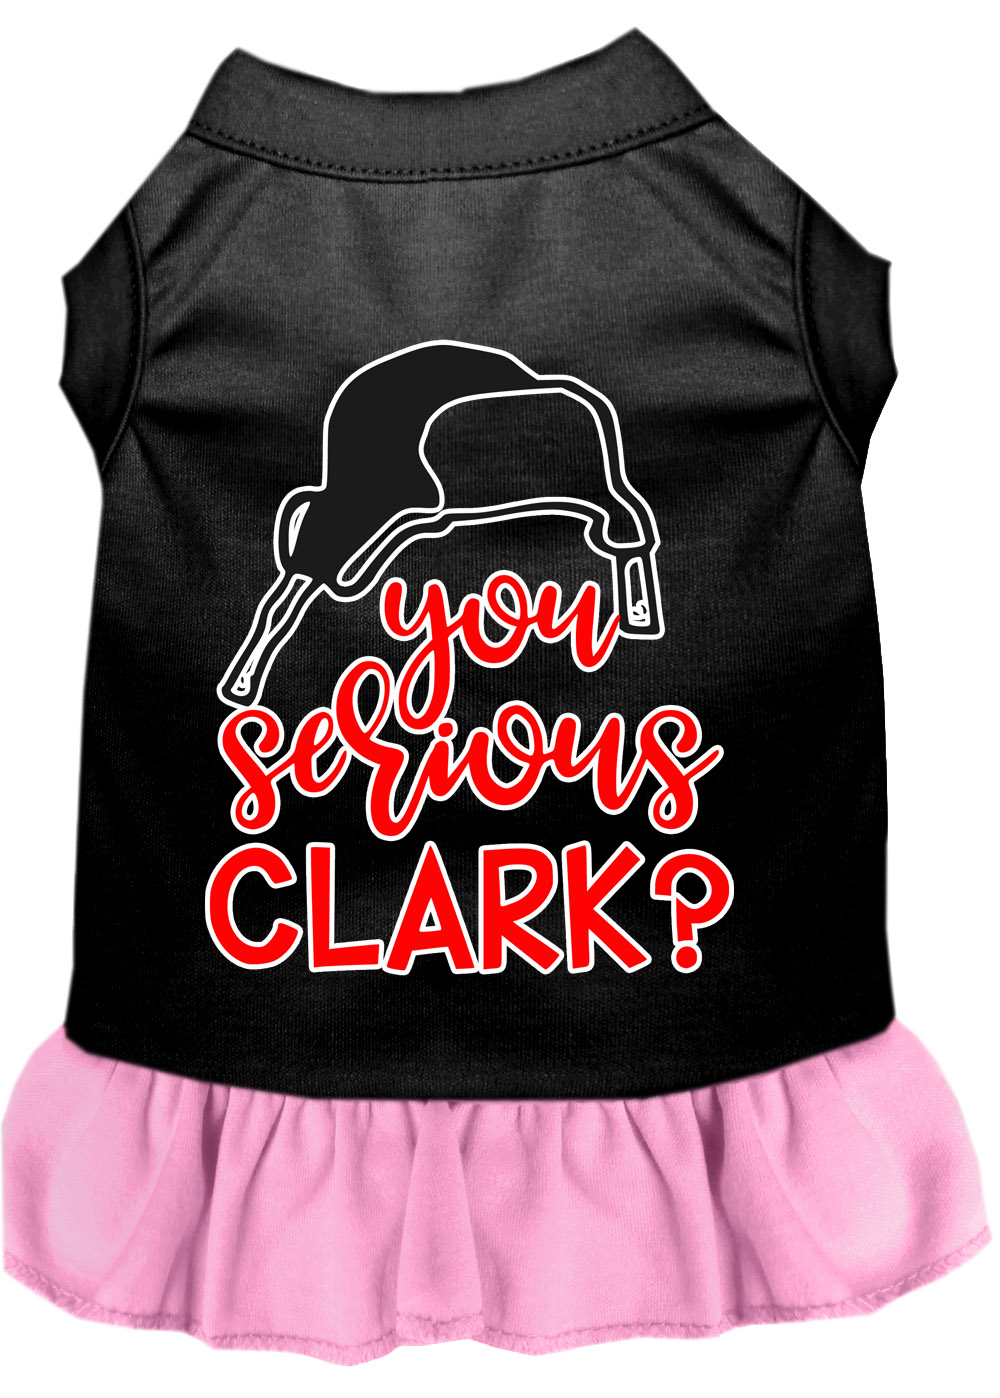 You Serious Clark? Screen Print Dog Dress Black with Light Pink XXL